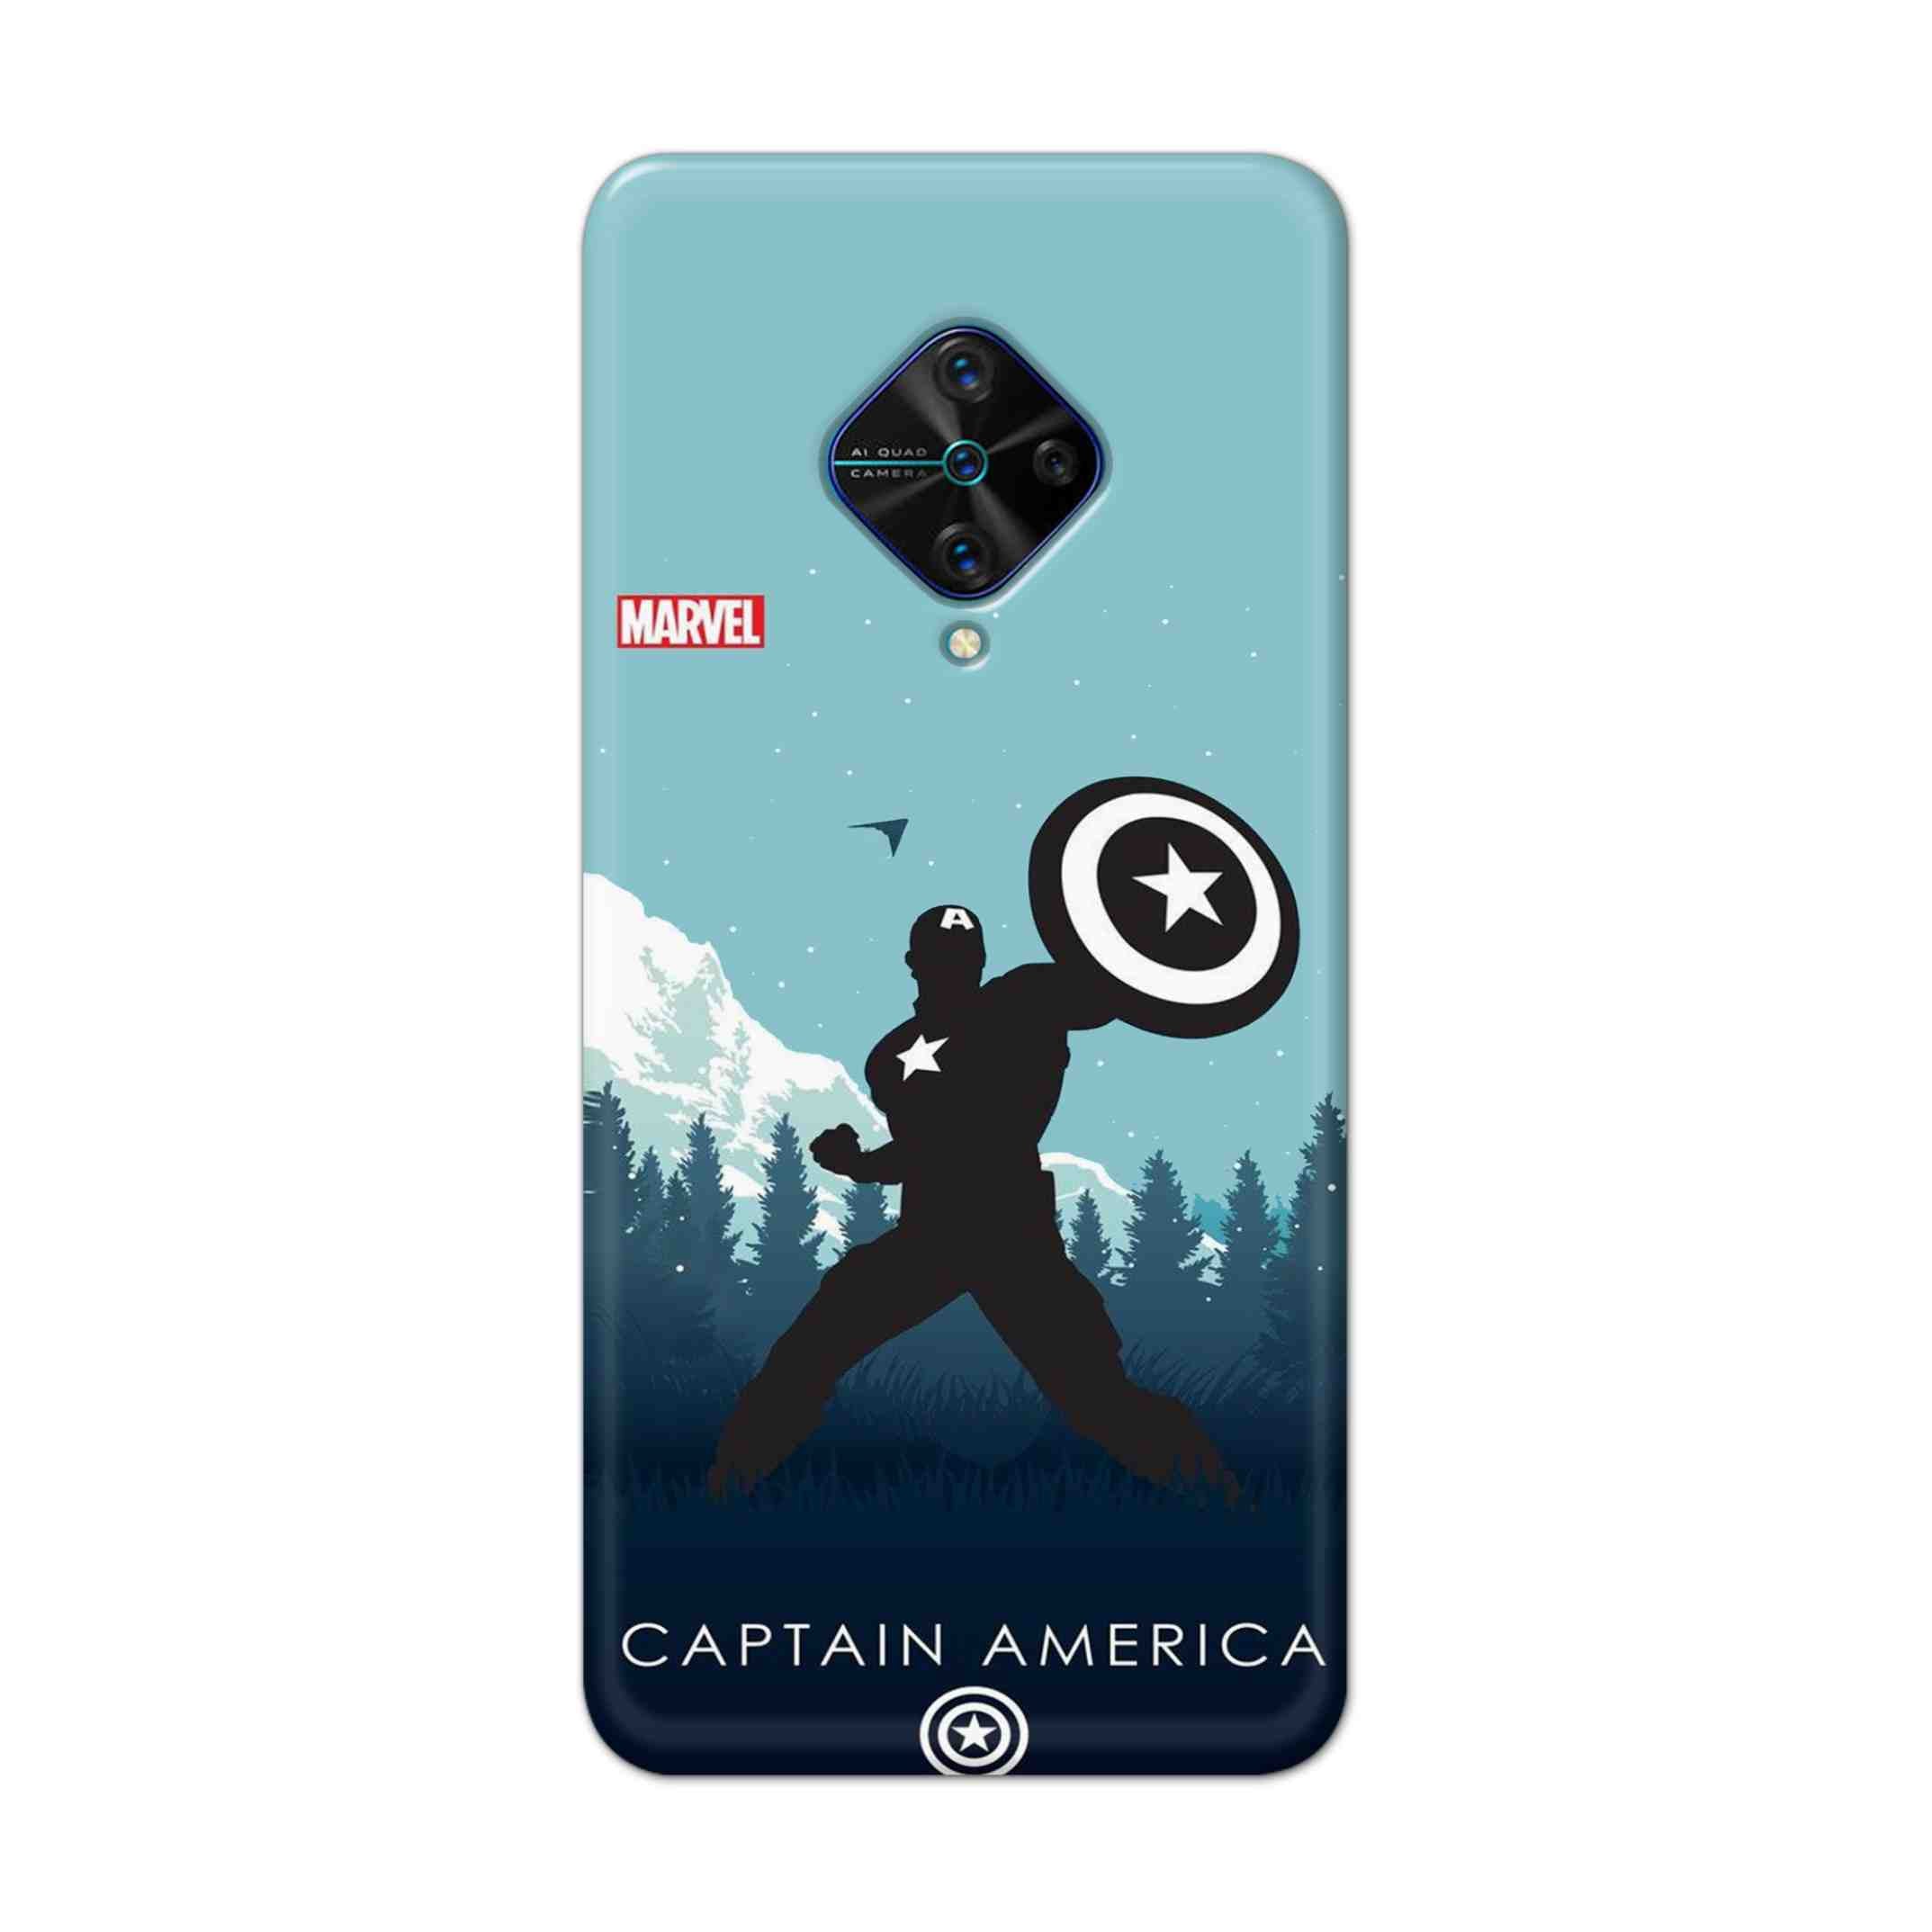 Buy Captain America Hard Back Mobile Phone Case Cover For Vivo S1 Pro Online